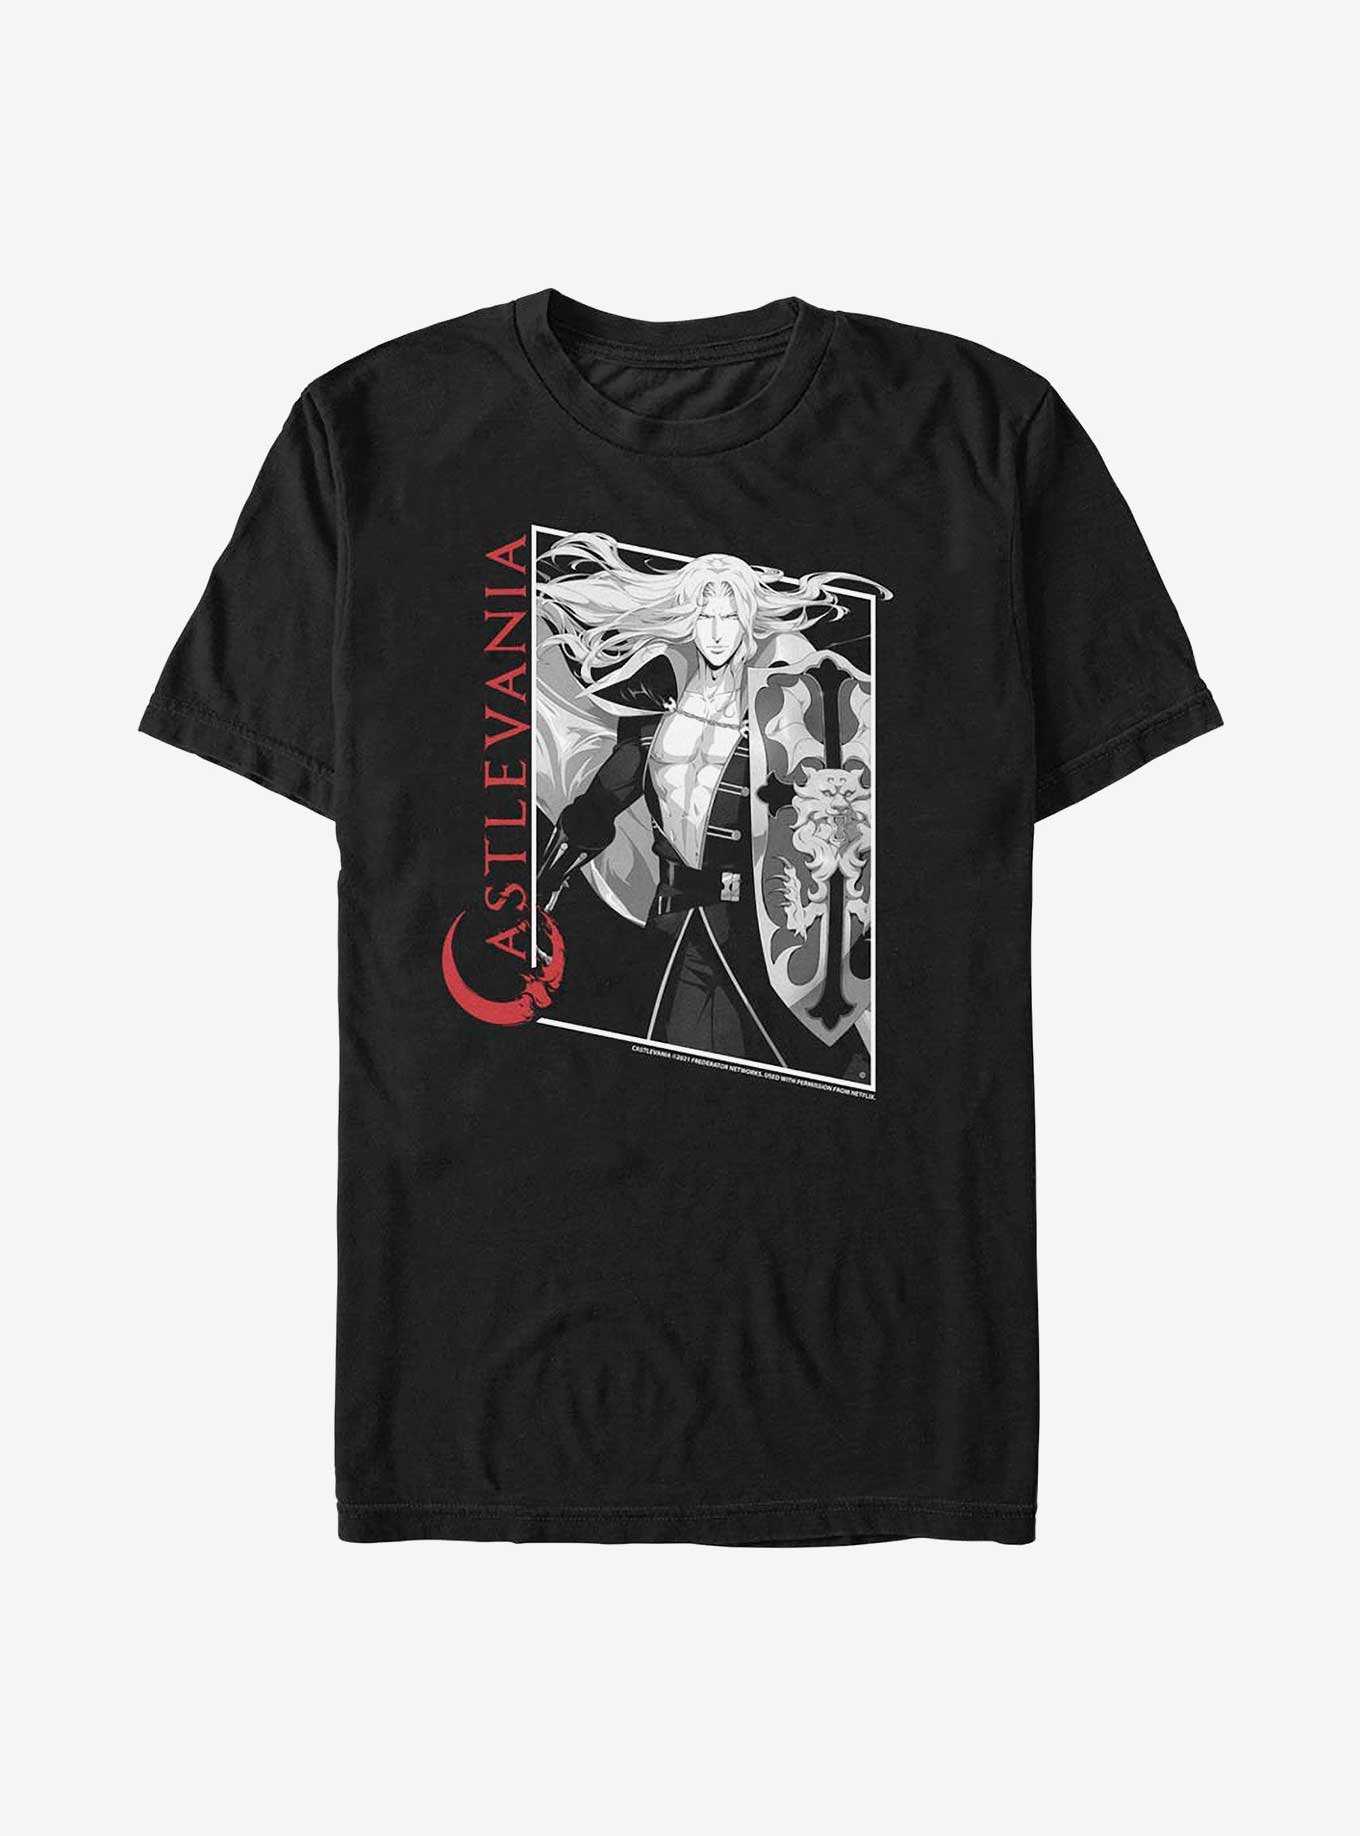 Castlevania Alucard Shield T-Shirt, , hi-res